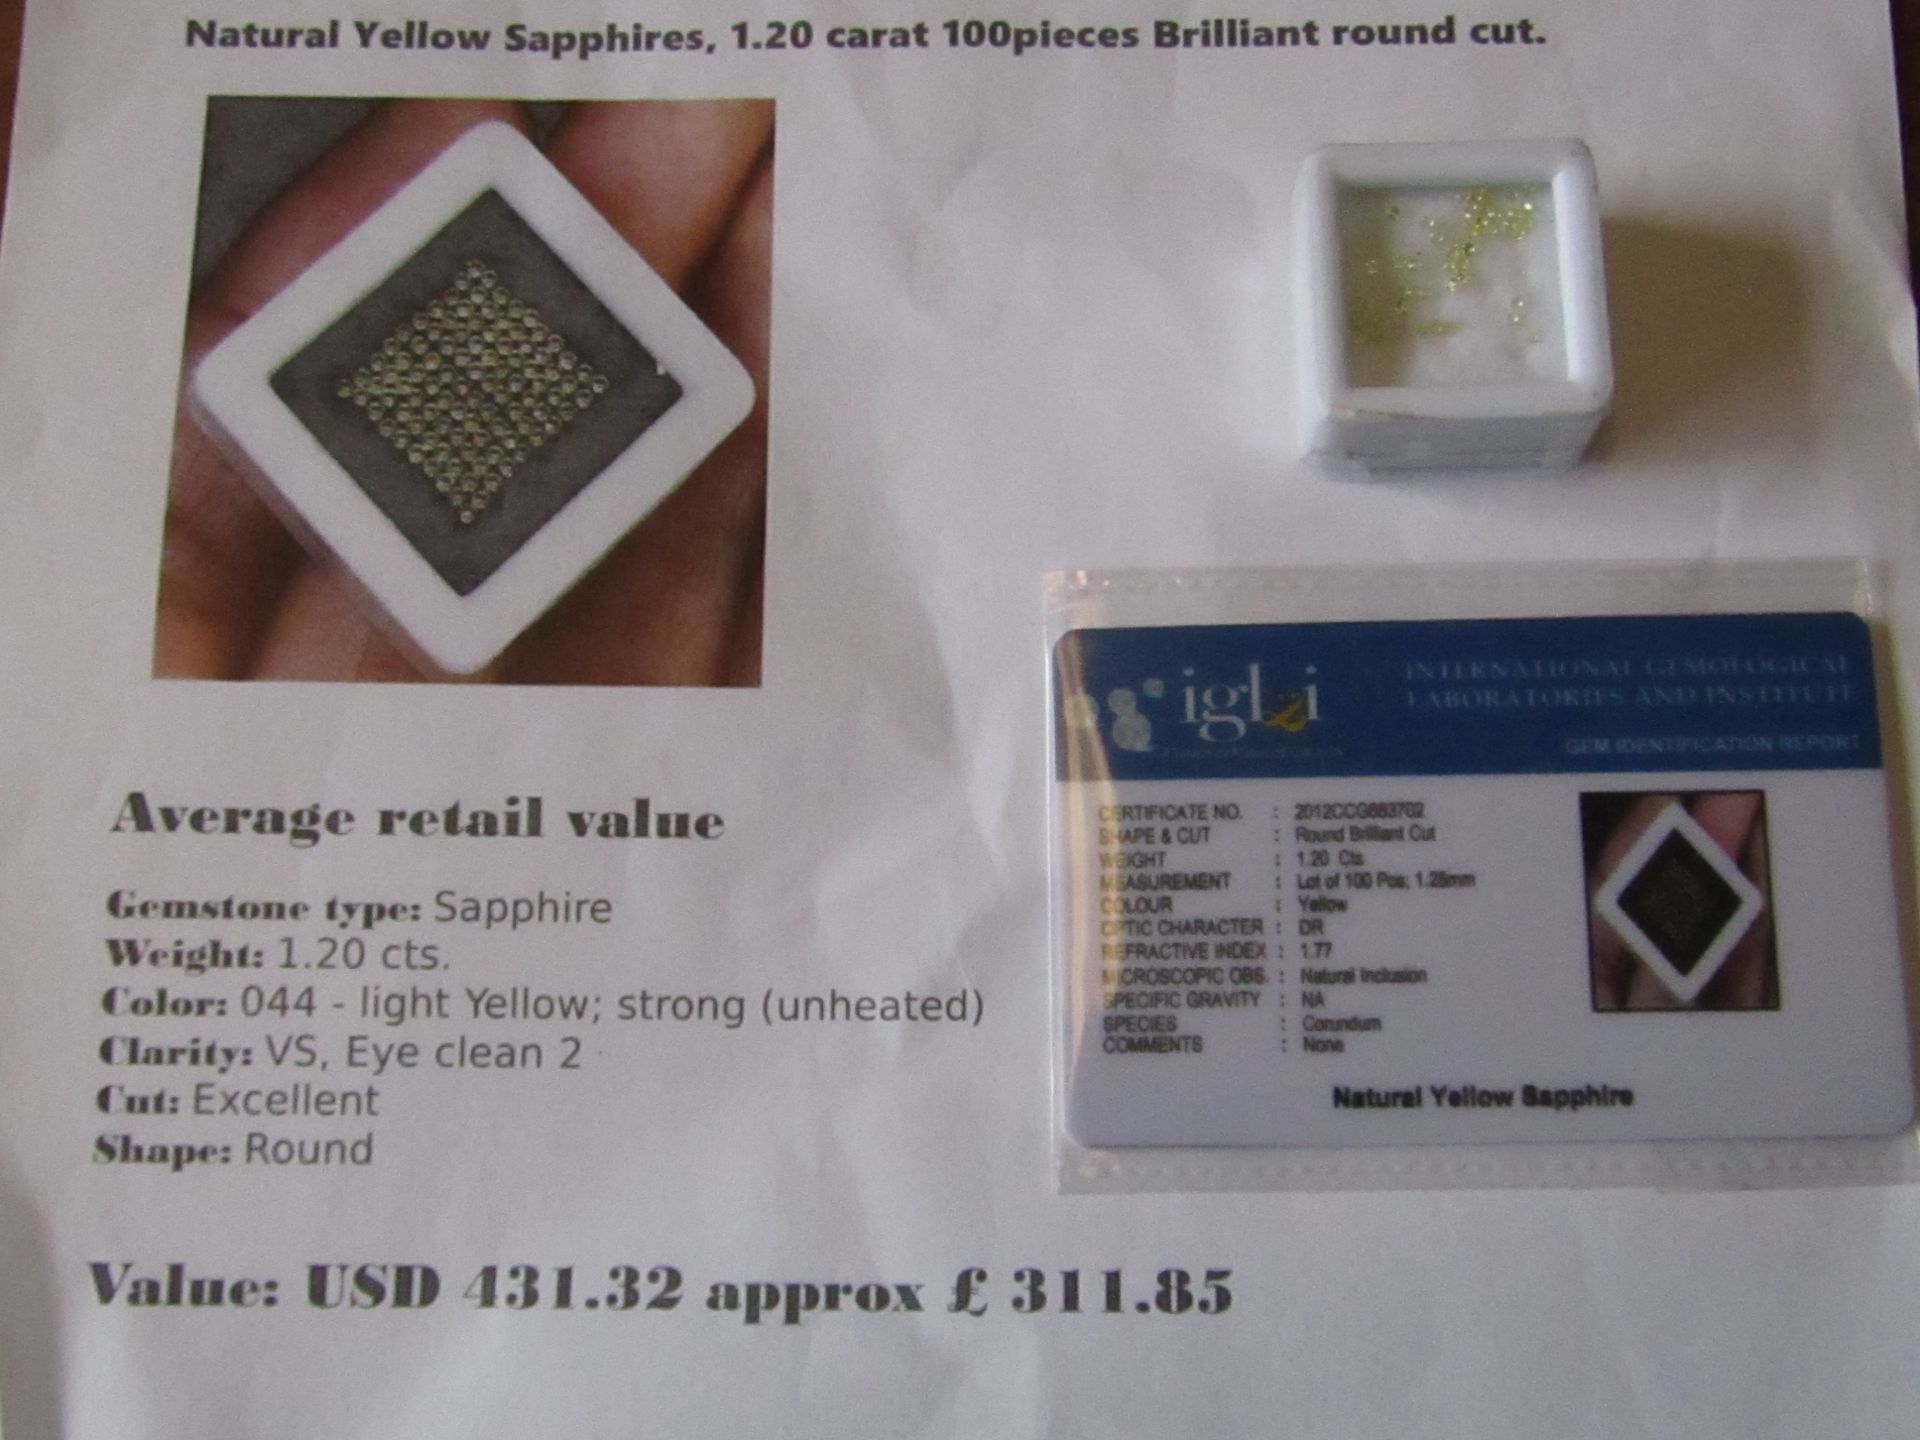 IGL&I Certified - Natural Sapphires - 1.20 carats - 100 pieces - Average retail value £311.85 IGL&